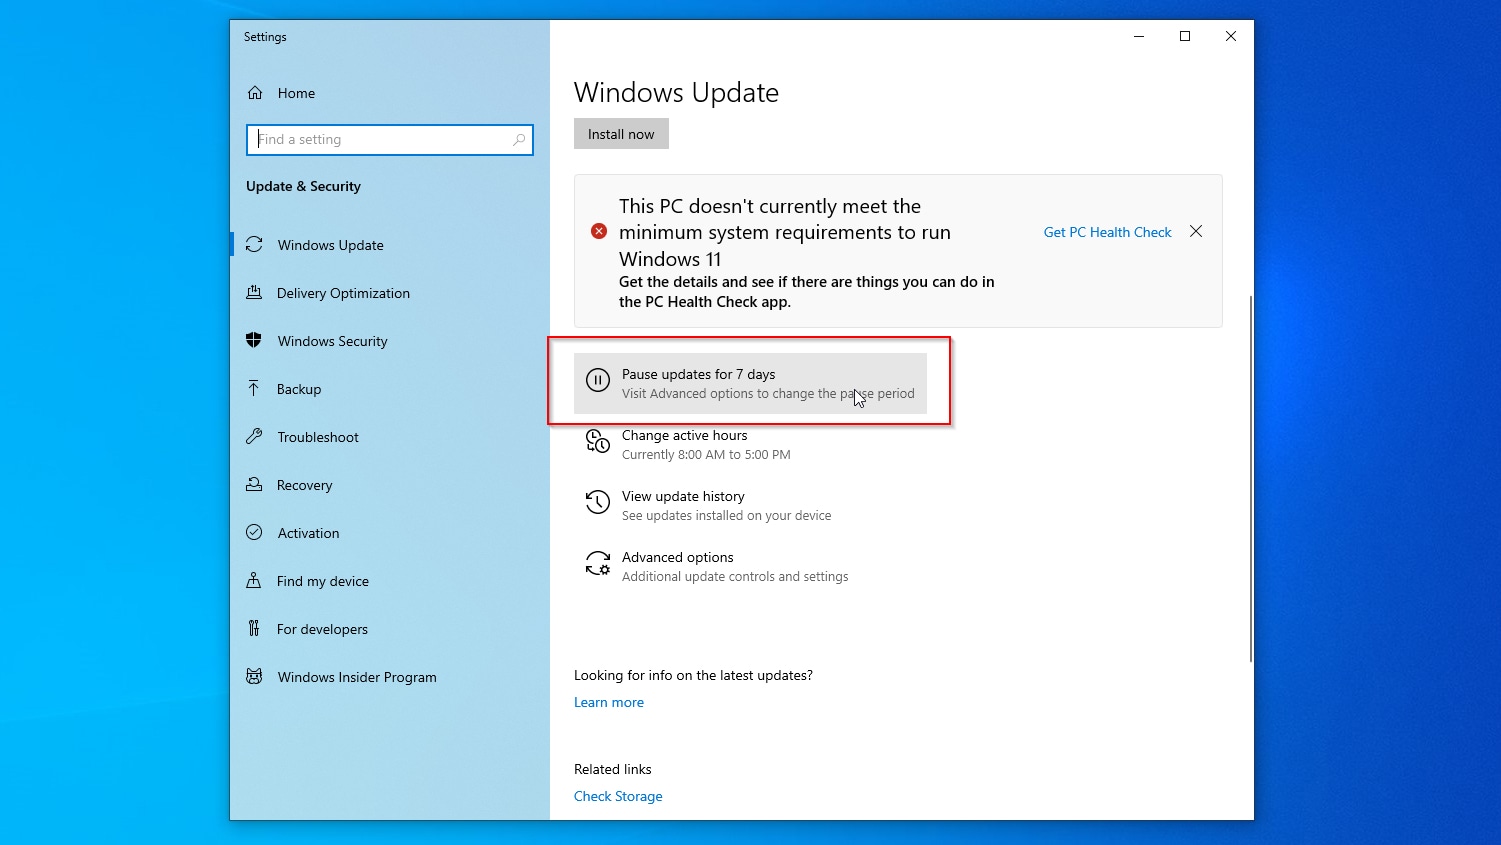 Windows Update Pause Updates For 7 Days